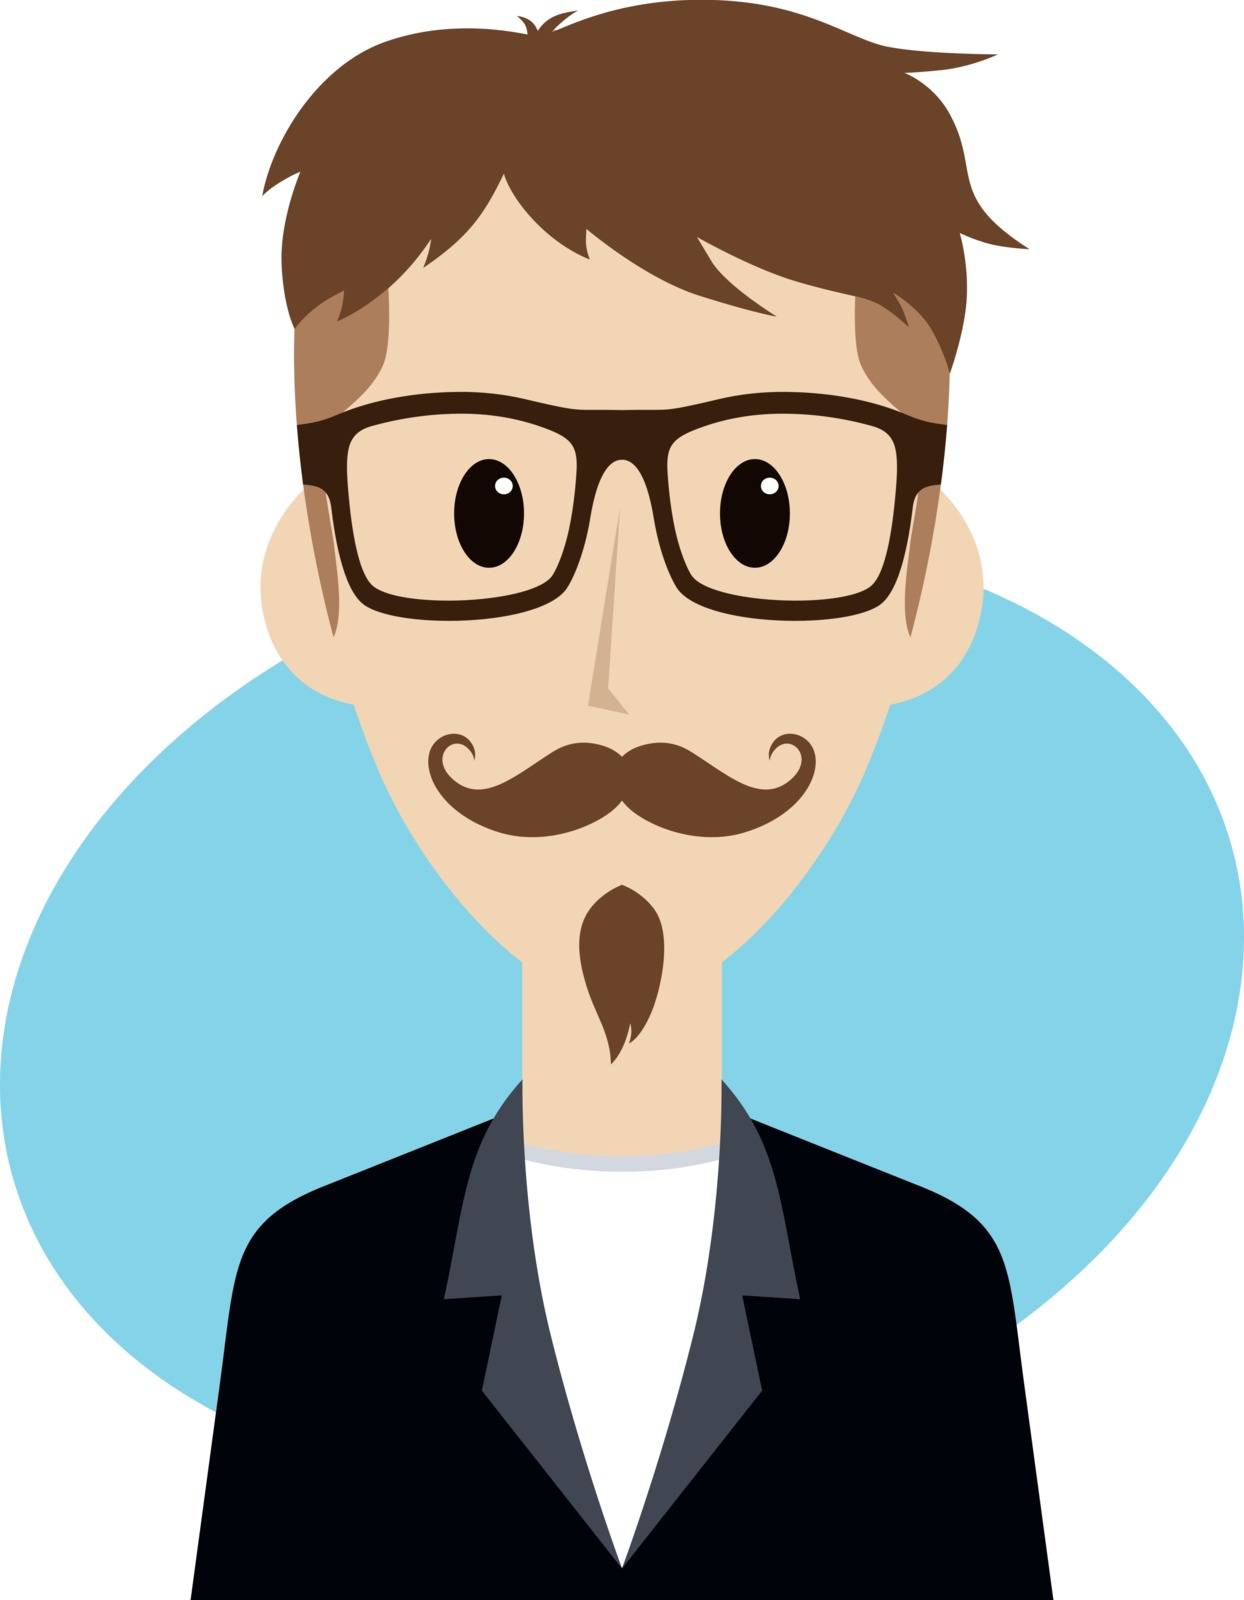 man avatar user picture cartoon character vector illustration